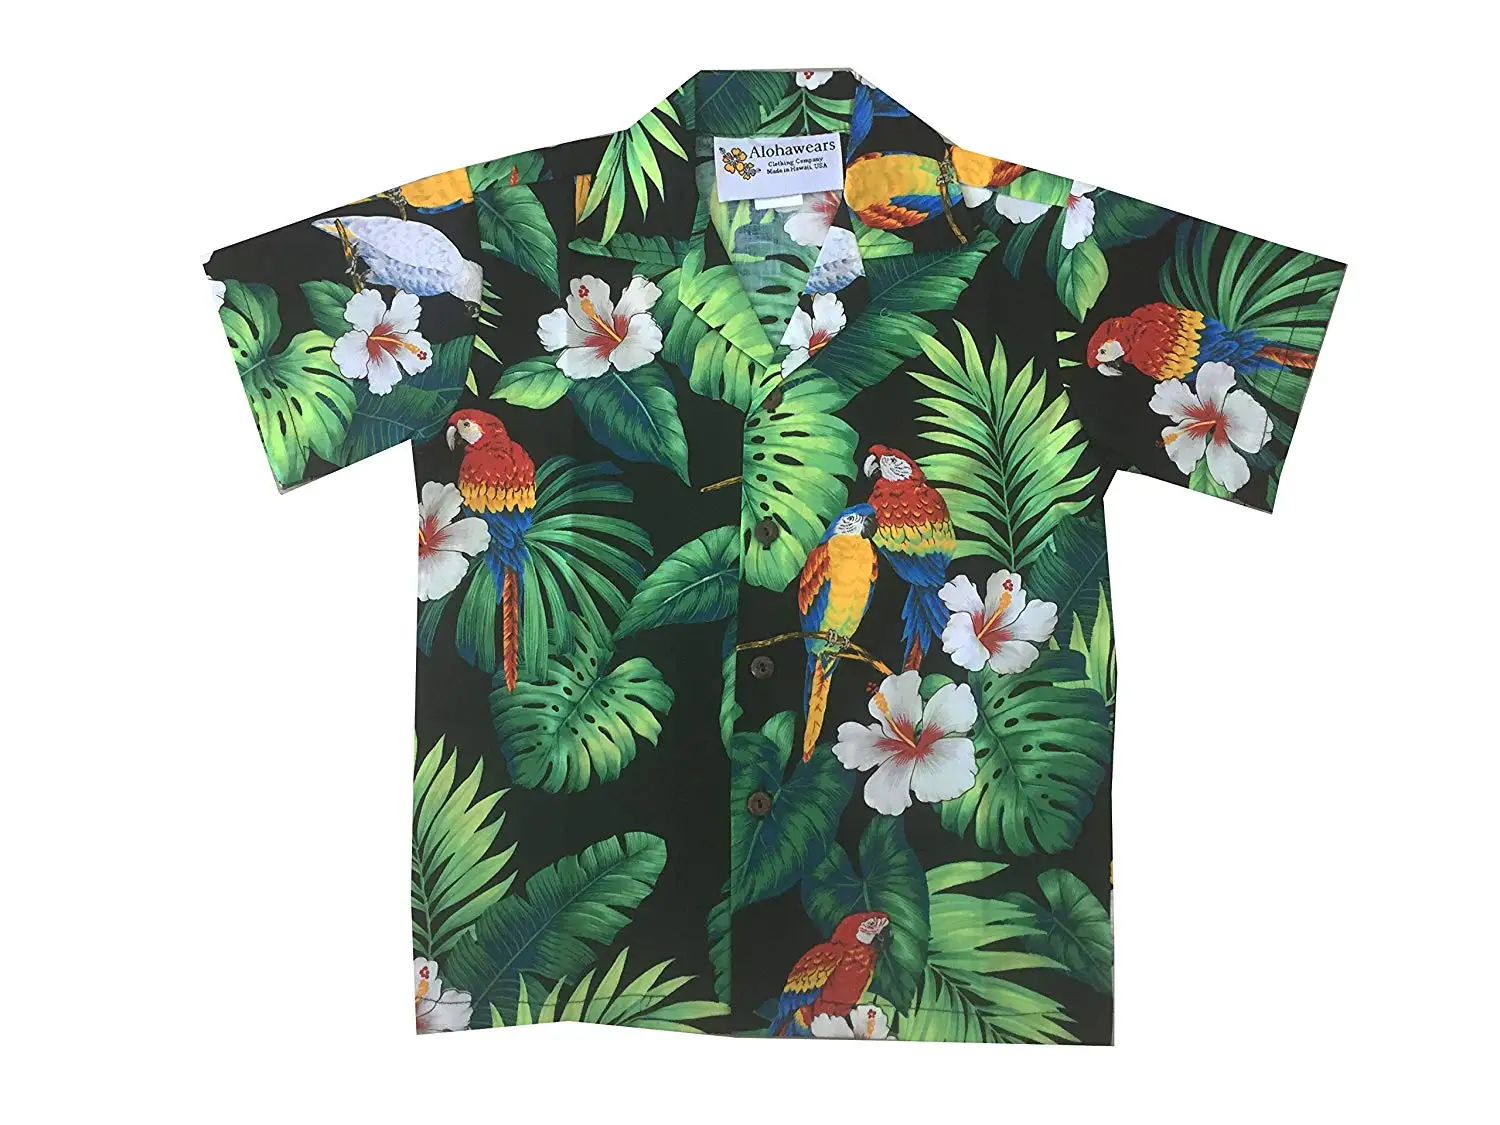 Boys Tropical Parrot Hawaiian Luau Cruise Aloha Shirt Made in Hawaii